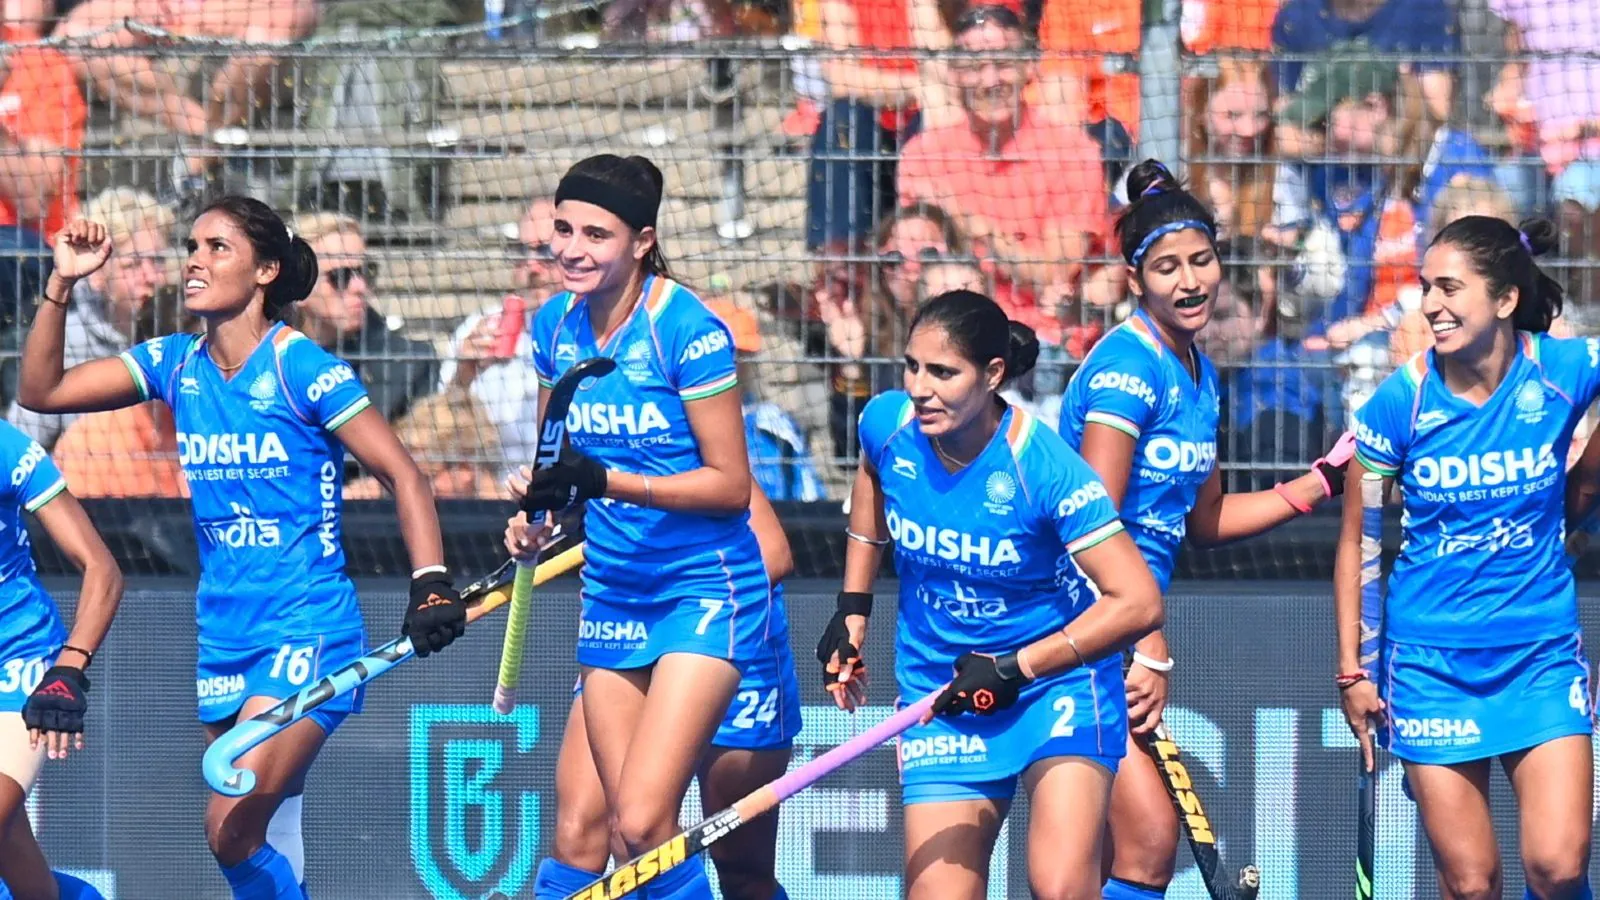 Commonweath Games 2022: India Women's Hockey Team beat Canada to reach semi final ਭਾਰਤੀ ਮਹਿਲਾ ਹਾਕੀ ਟੀਮ ਨੇ ਜਿੱਤਿਆ ਕਰੋ ਜਾਂ ਮਰੋ ਦਾ ਮੈਚ, ਸੈਮੀਫਾਈਨਲ 'ਚ ਬਣਾਈ ਥਾਂ, ਕੈਨੇਡਾ ਨੂੰ ਦਿੱਤੀ ਮਾਤ